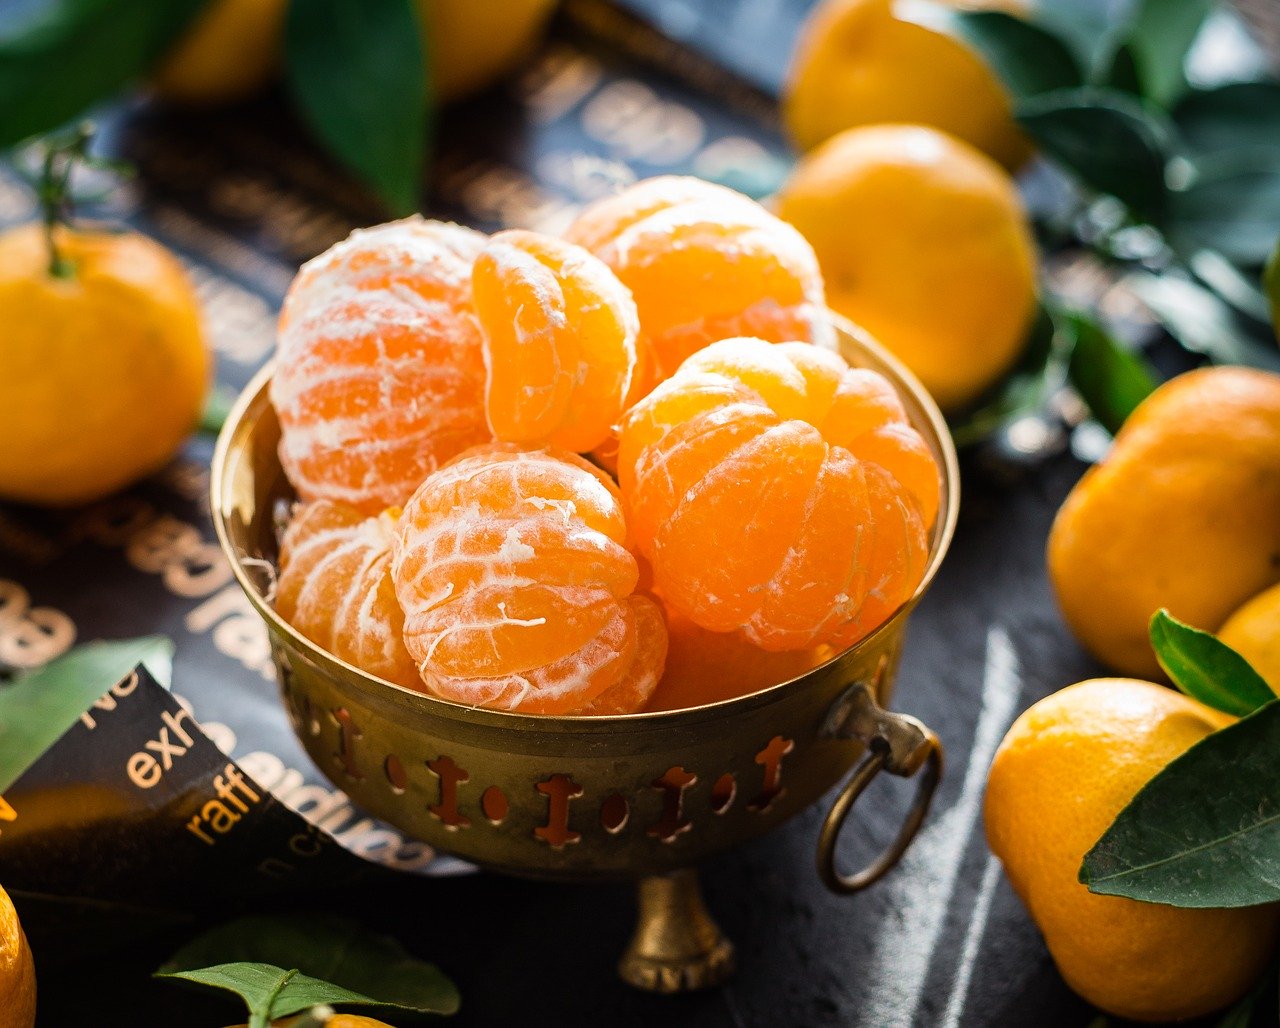 benefits of oranges